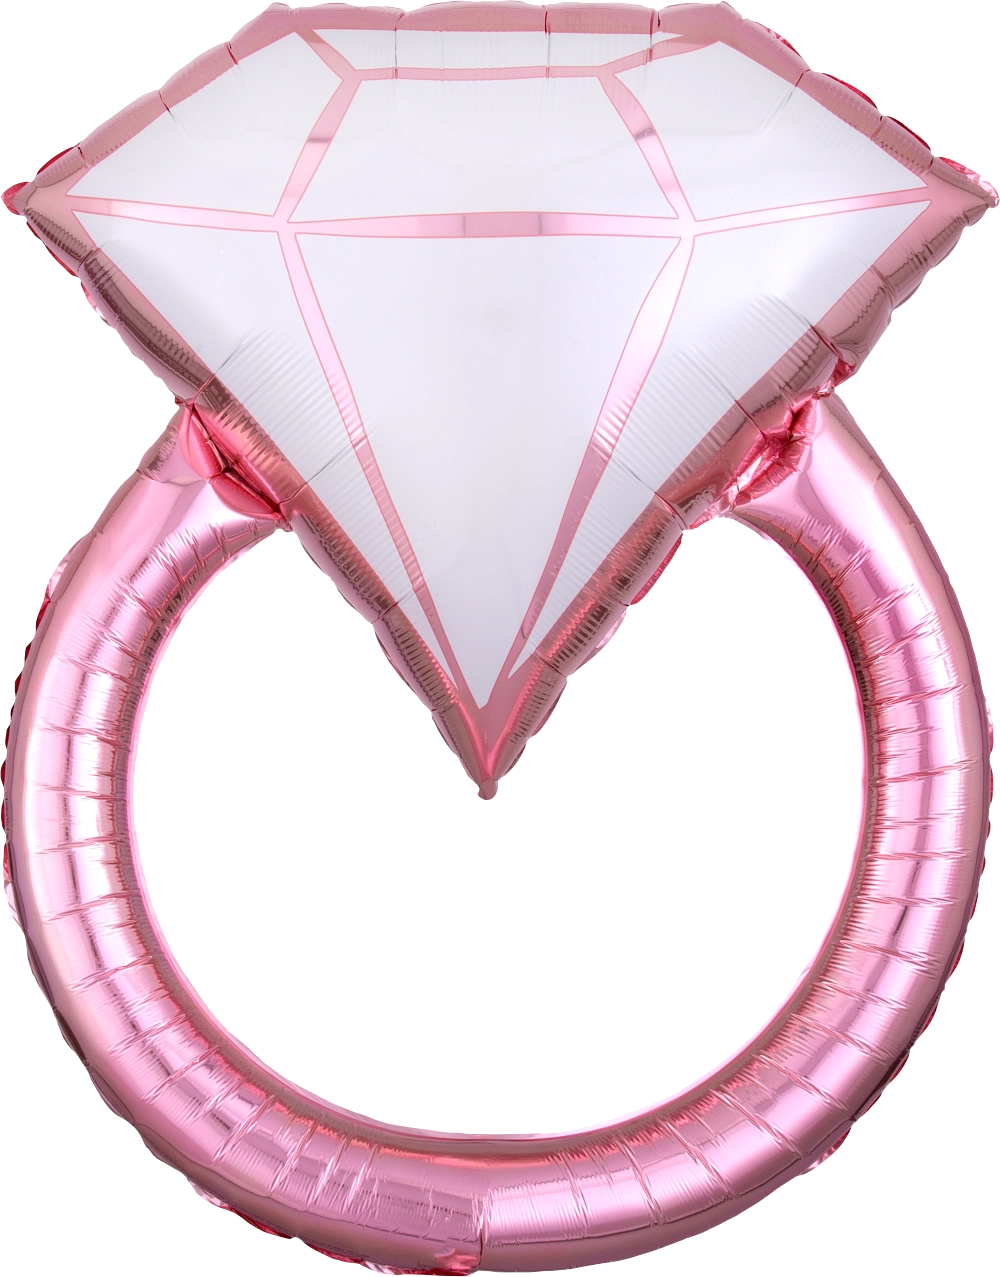 Super Blush Wedding Ring helium balloon delivery montreal ballon livraison montreal